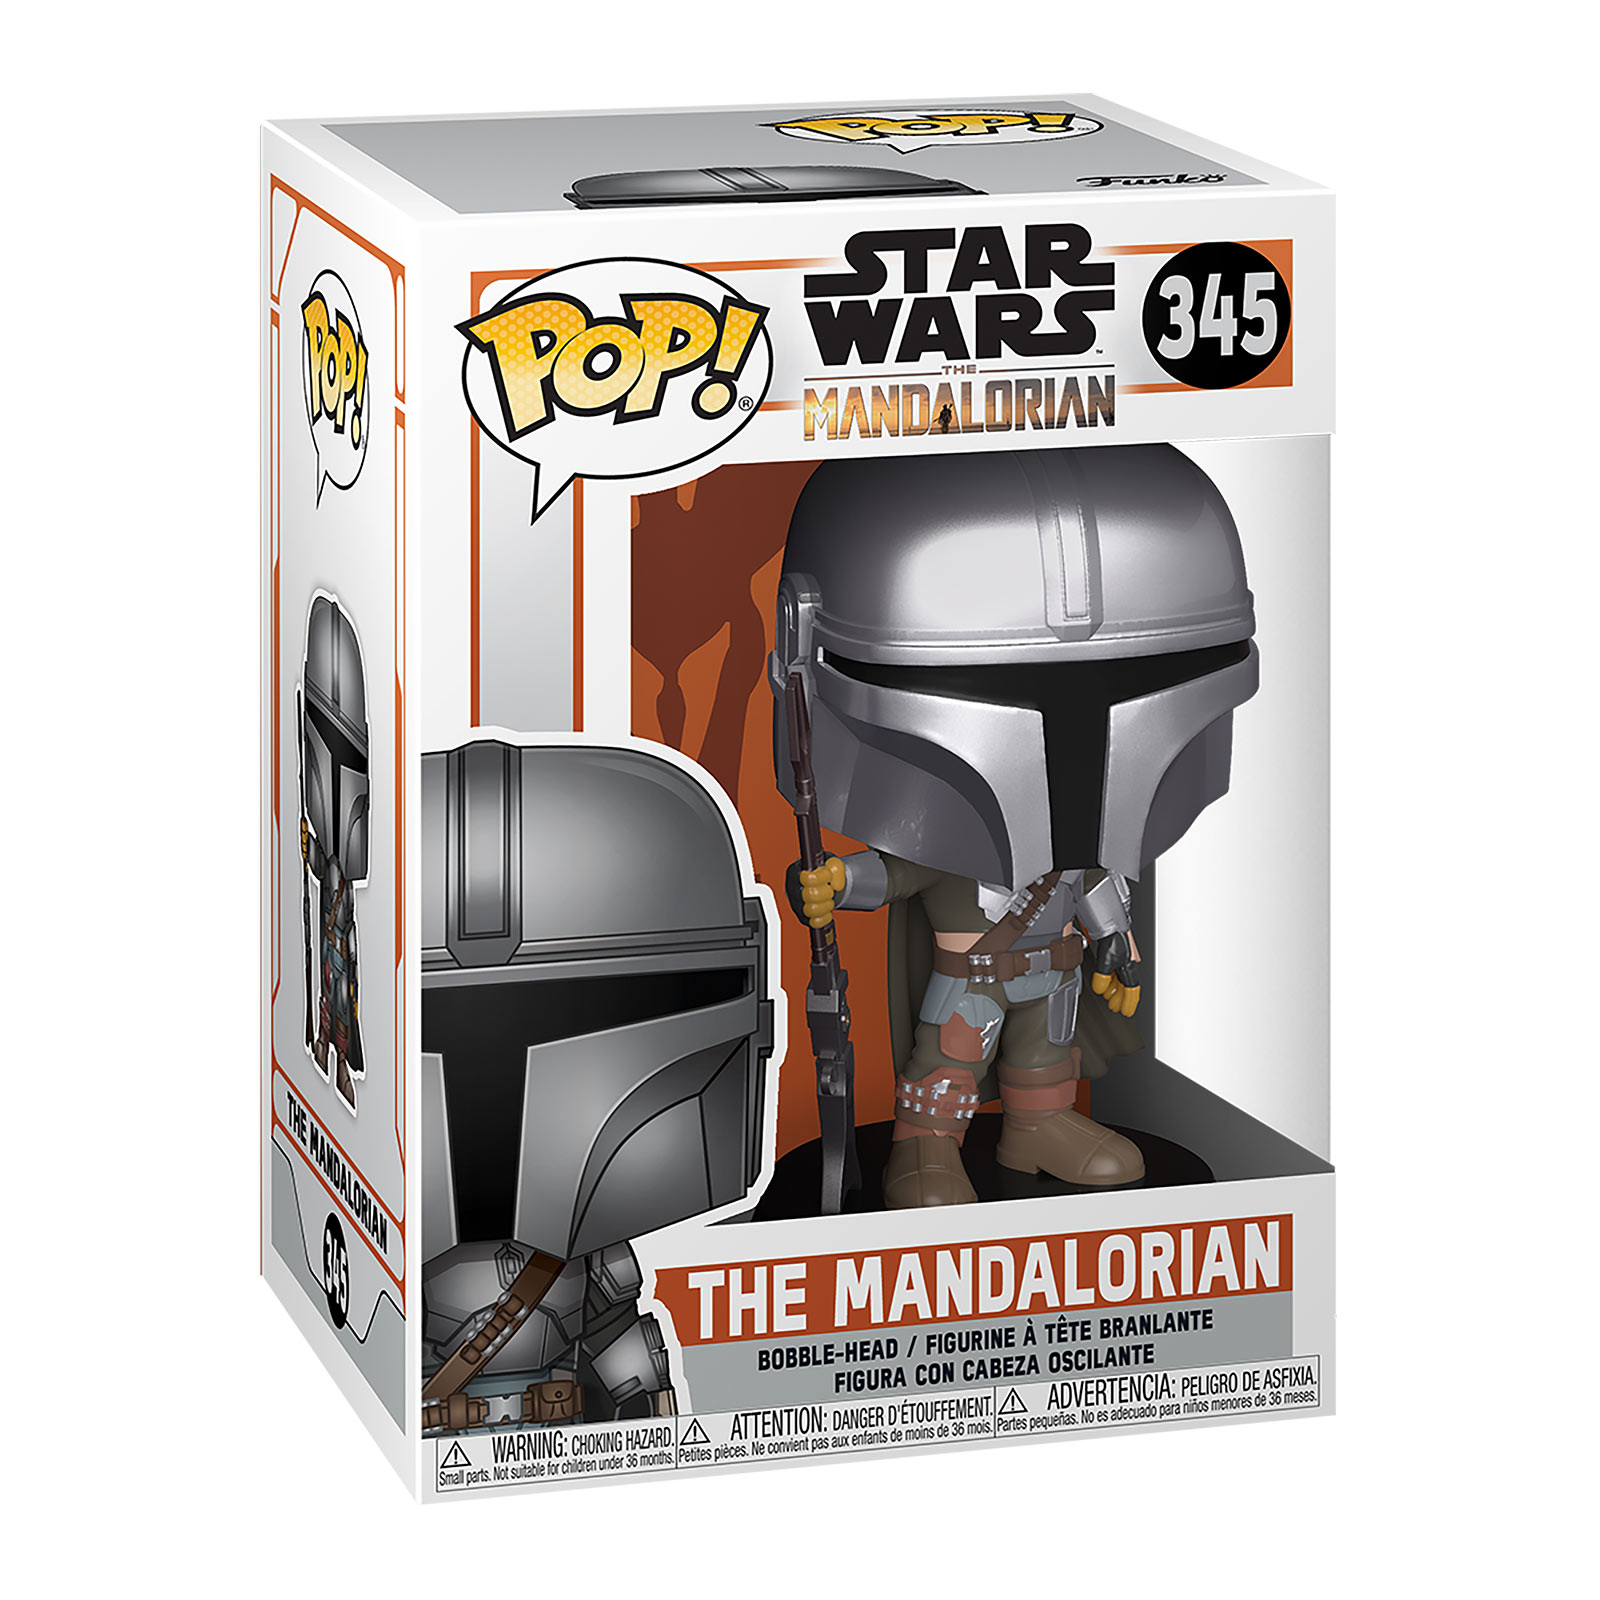 The Mandalorian Funko Pop bobblehead figure - Star Wars